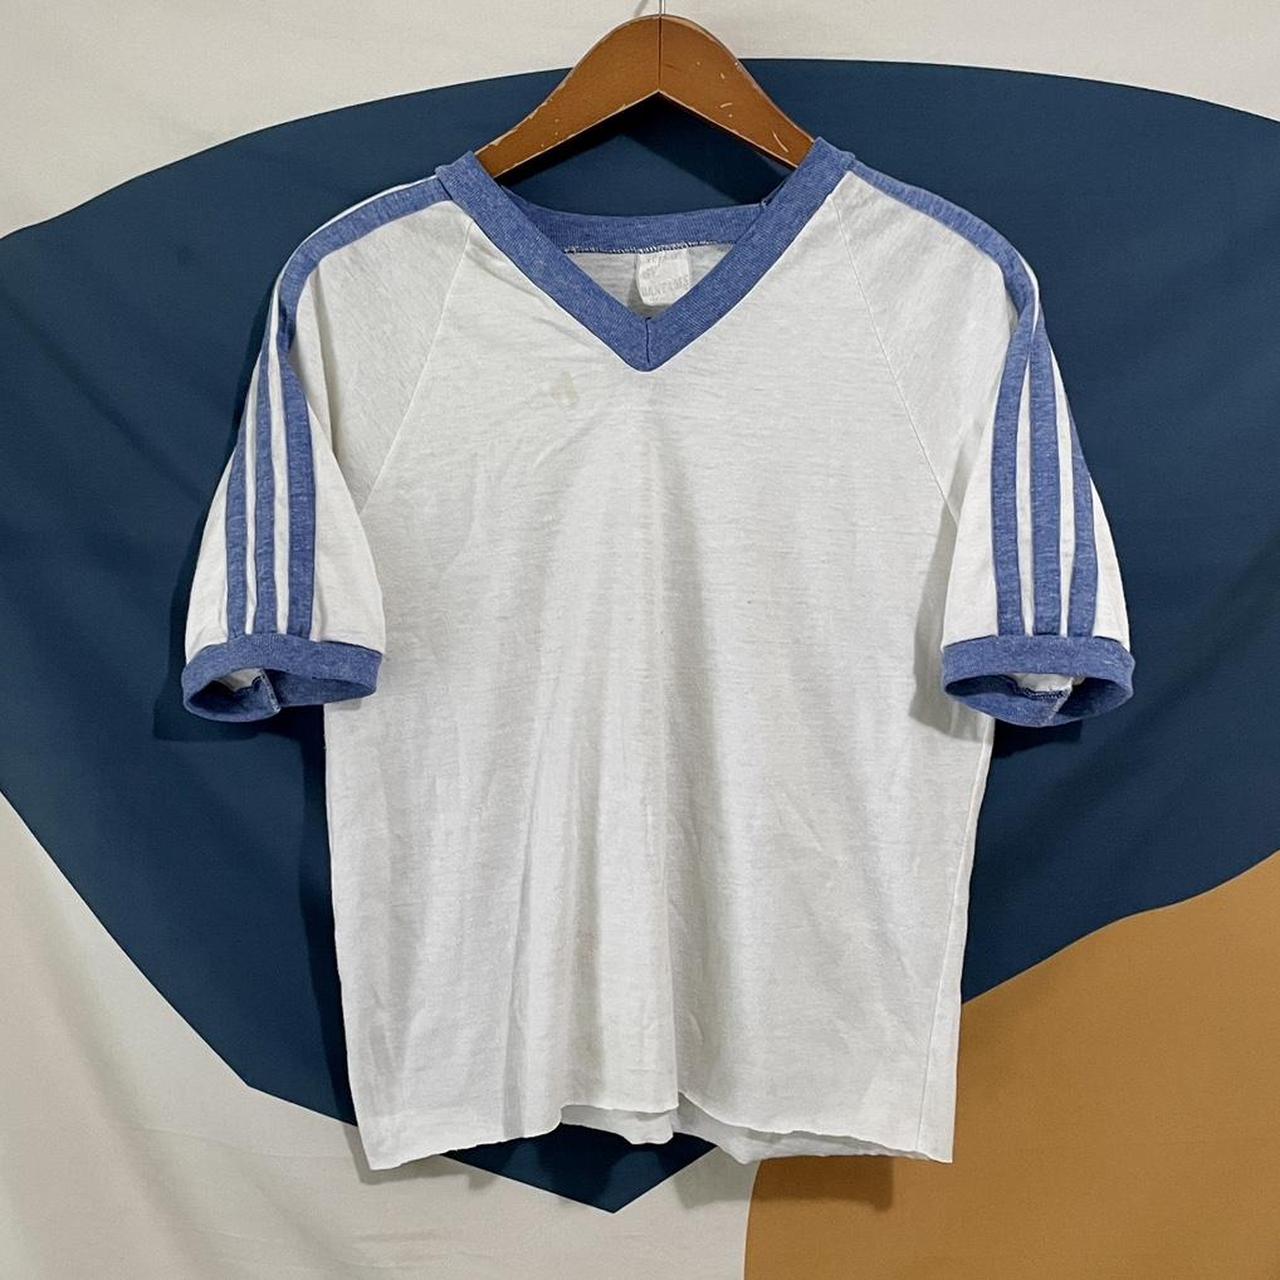 Women's White and Blue T-shirt | Depop